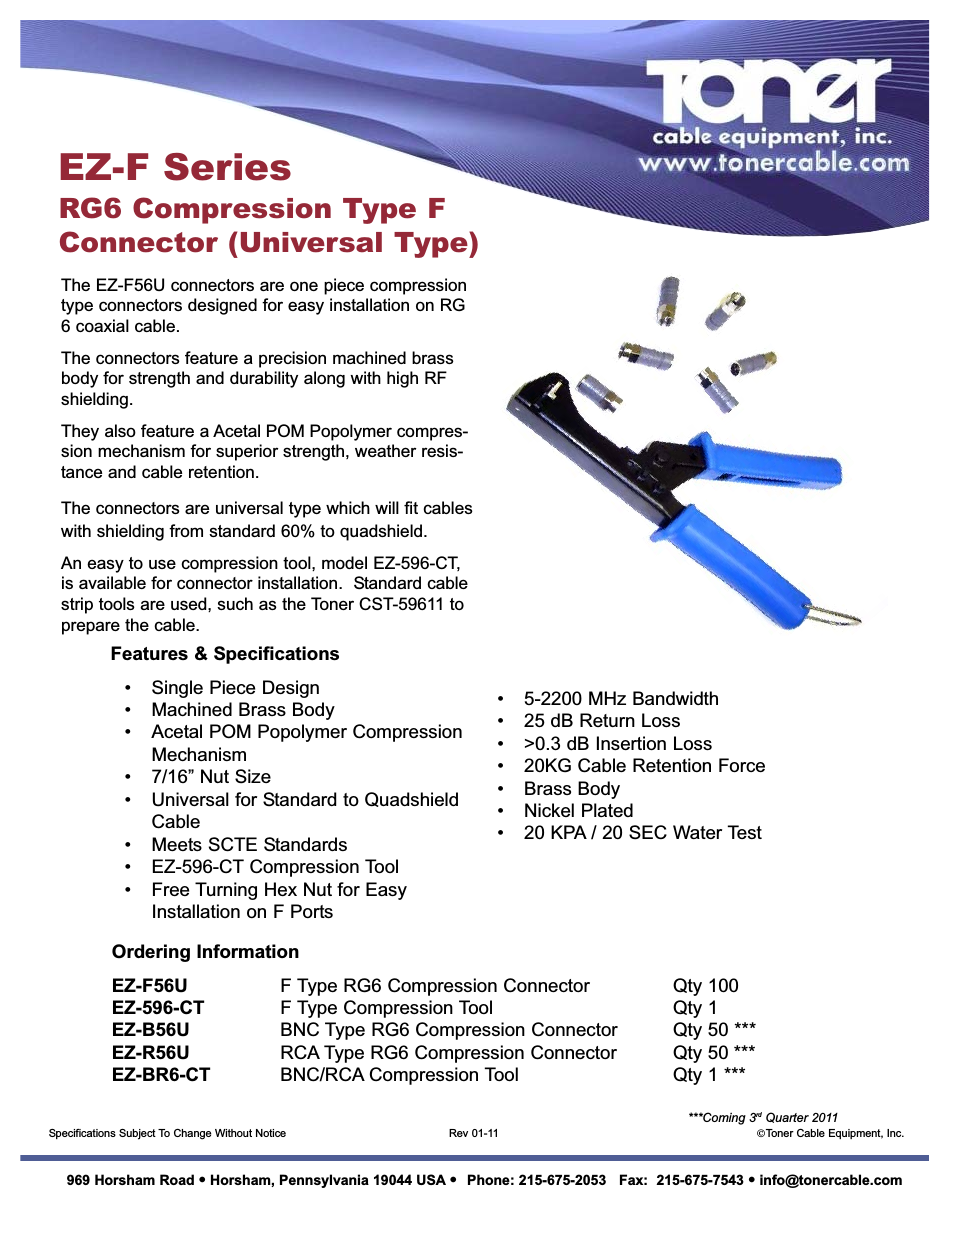 EZ-596-CT F Type Compression Tool